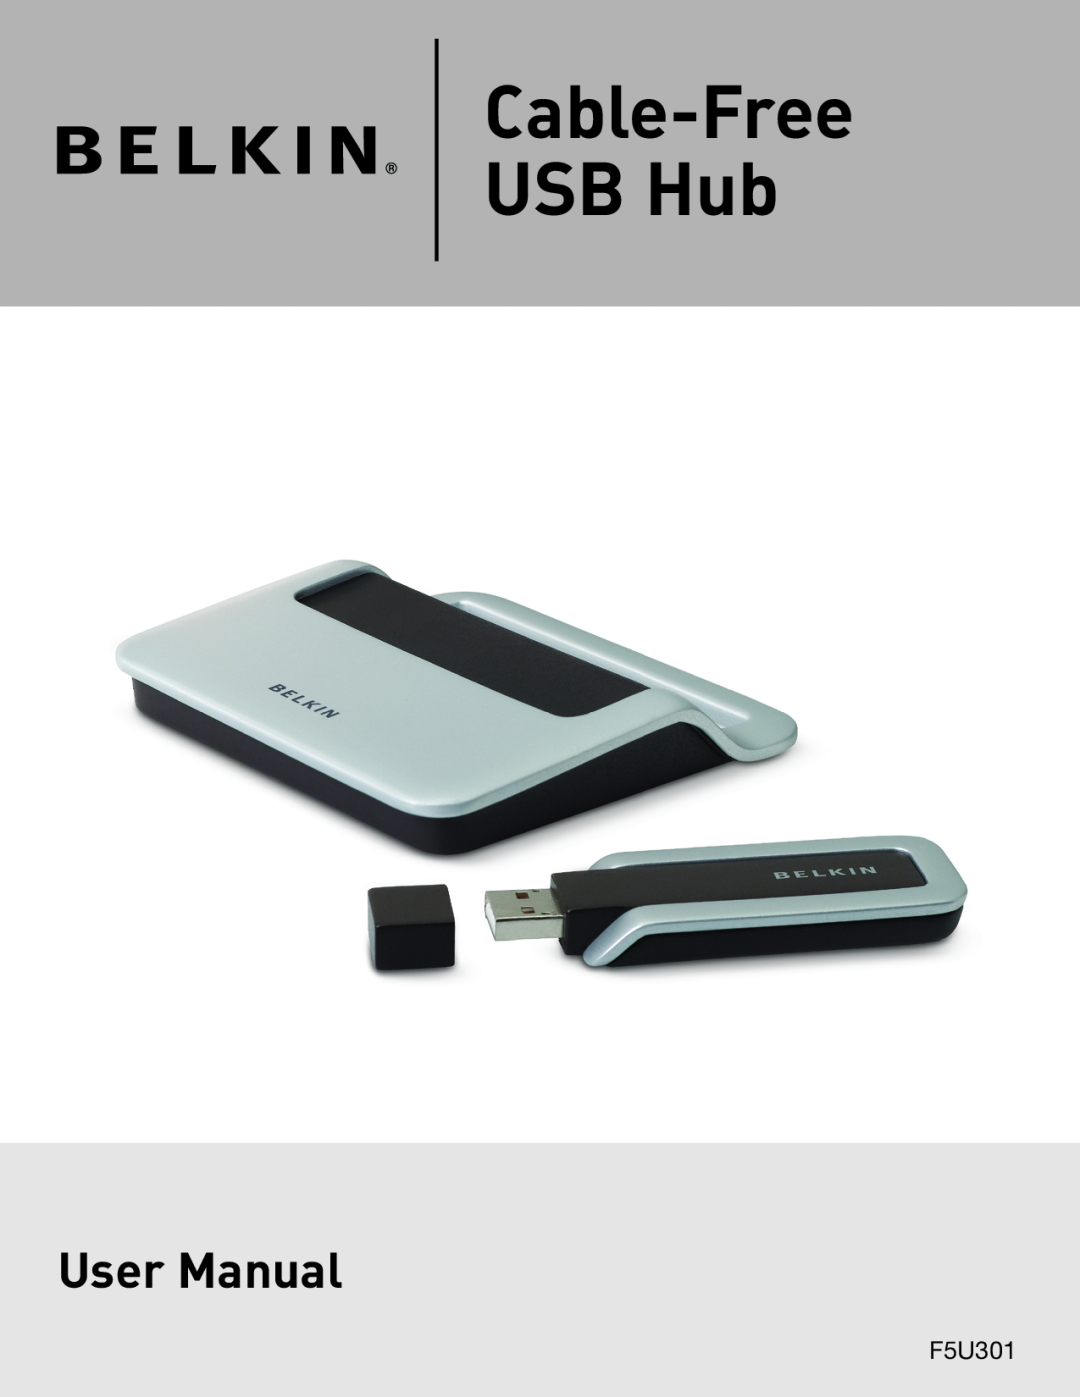 Belkin F5U301 user manual Cable-Free USB Hub, User Manual 